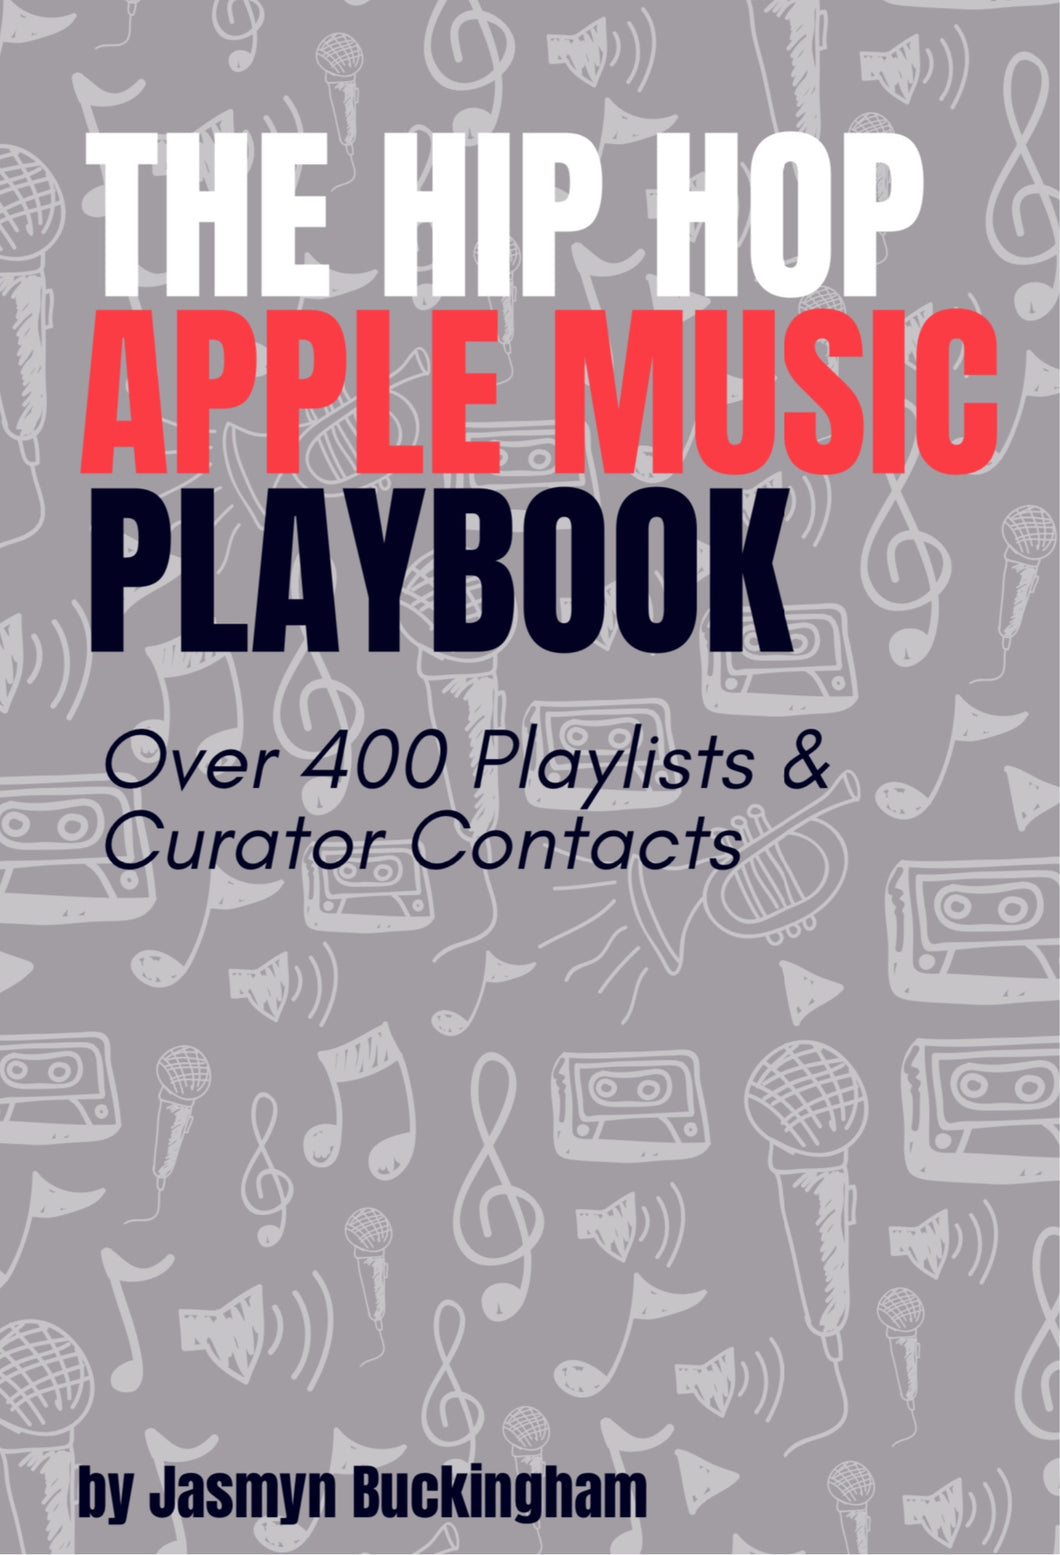 The Hip Hop Apple Music Playbook